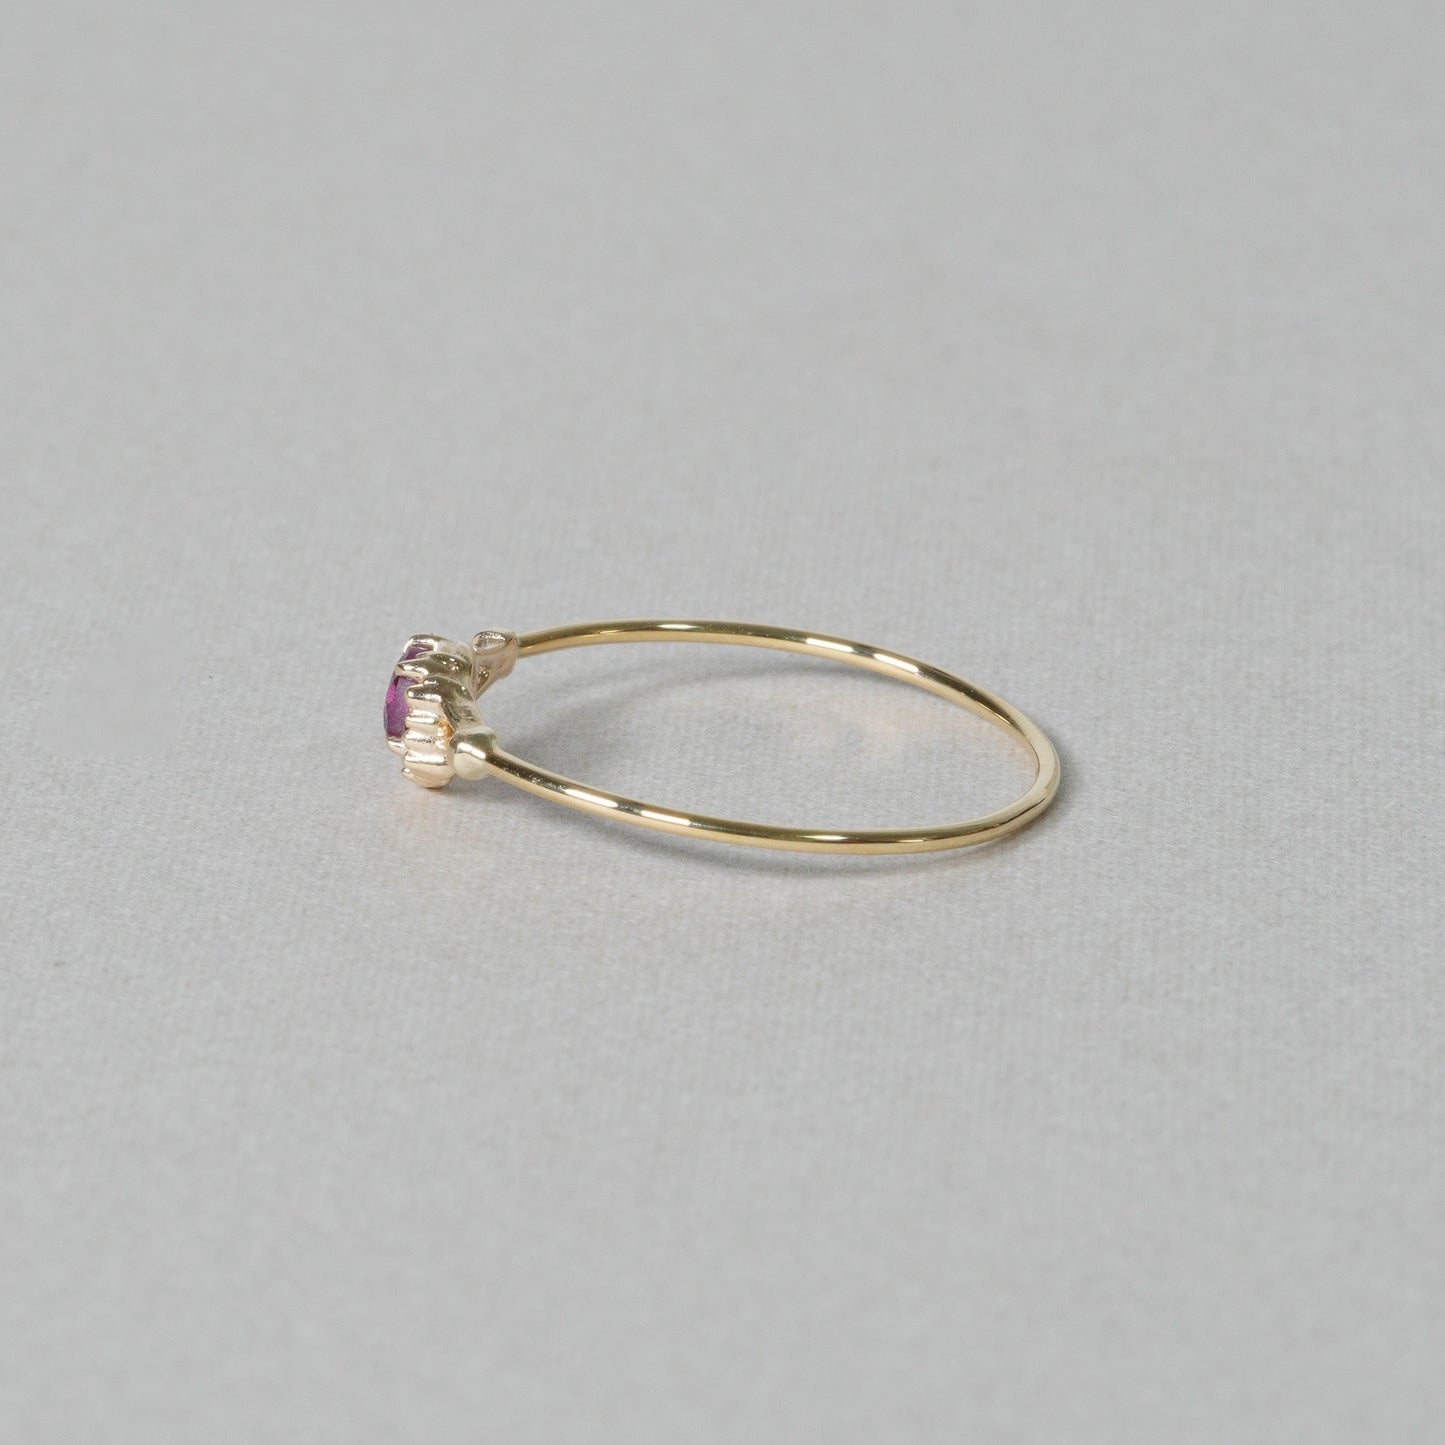 13 Rhodolite Garnet Ring “THIN LINE”